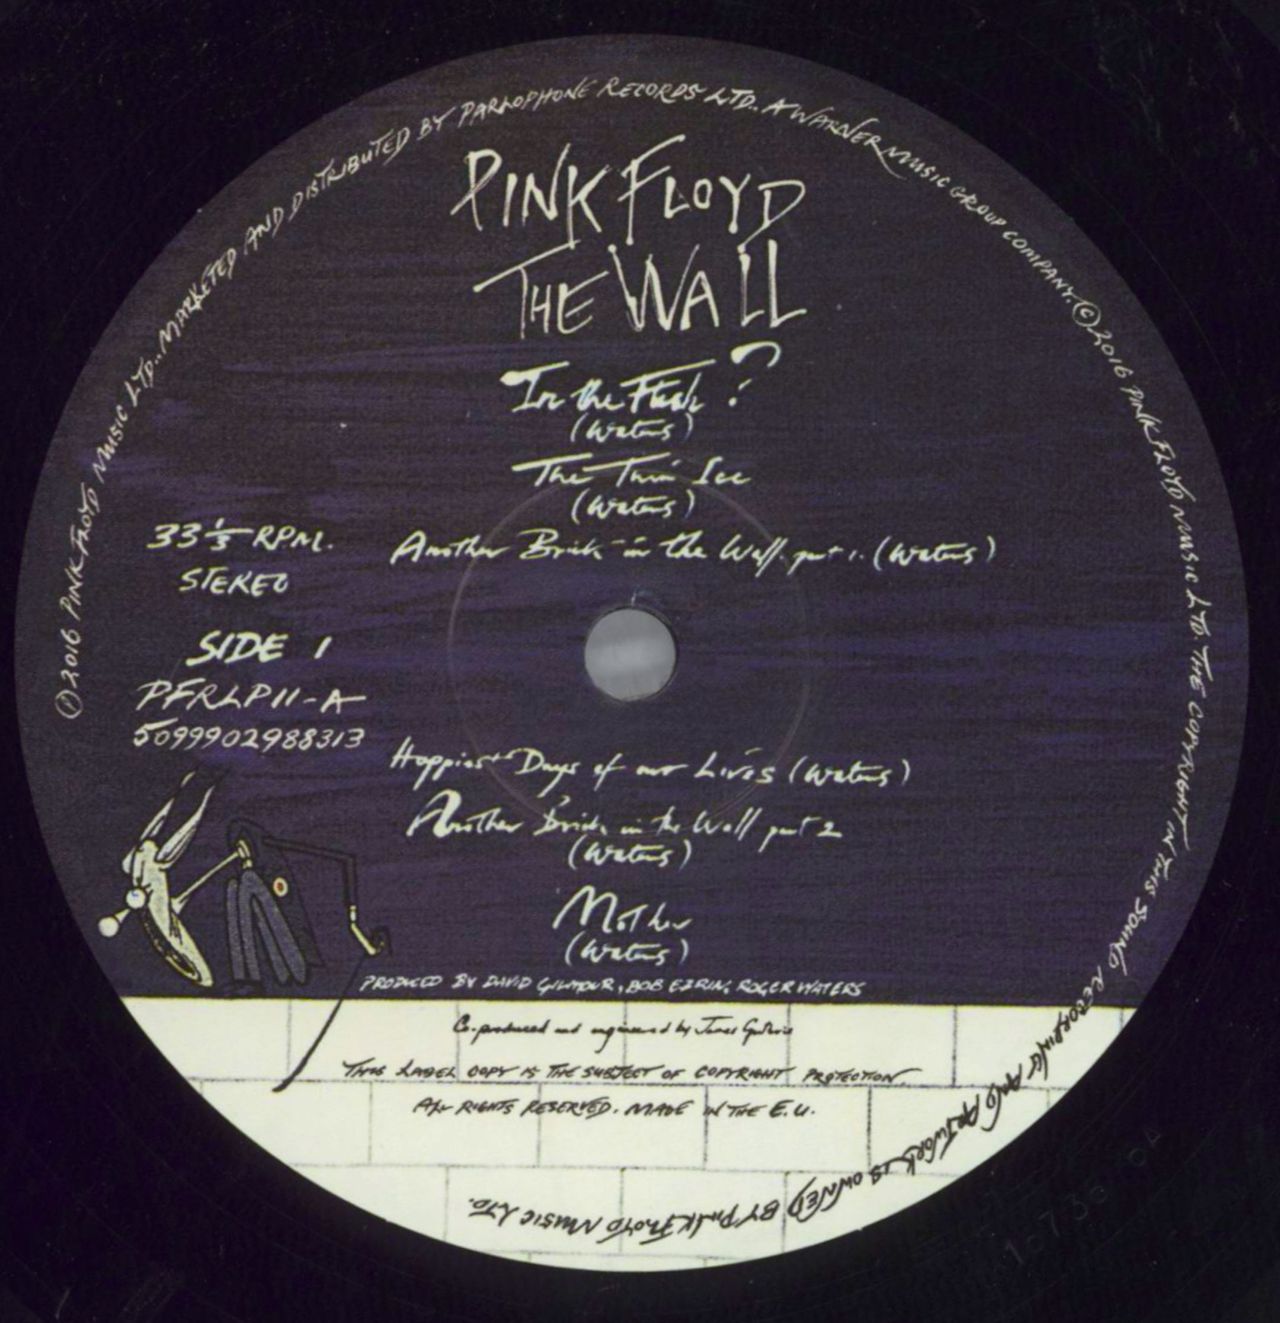 Pink Floyd The Wall - Remastered 180 Gram UK 2-LP vinyl set